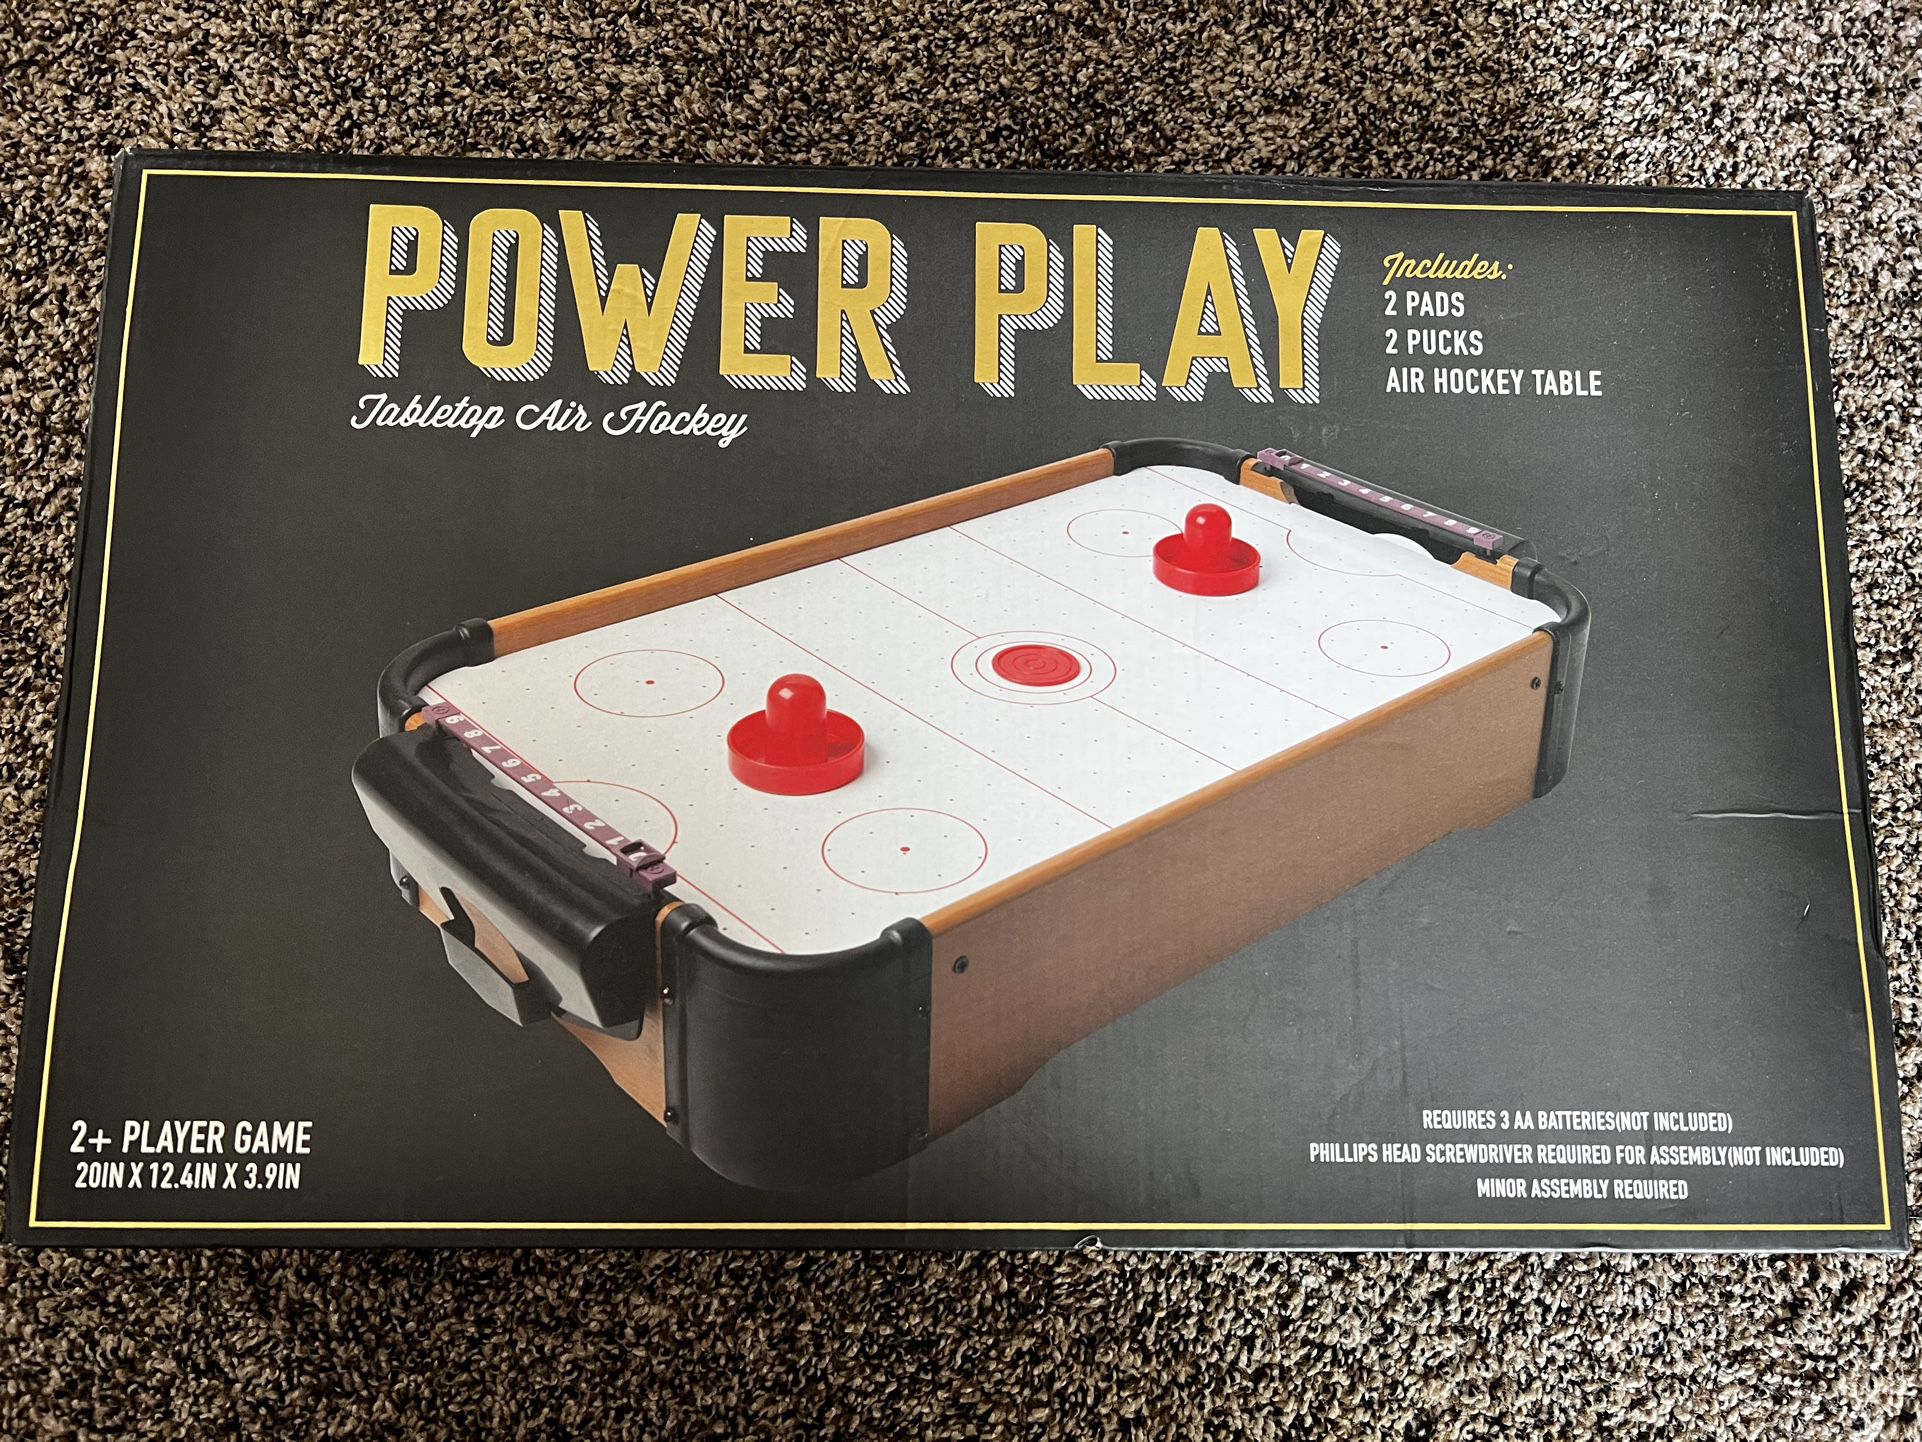 Power Play Table Air Hockey Game